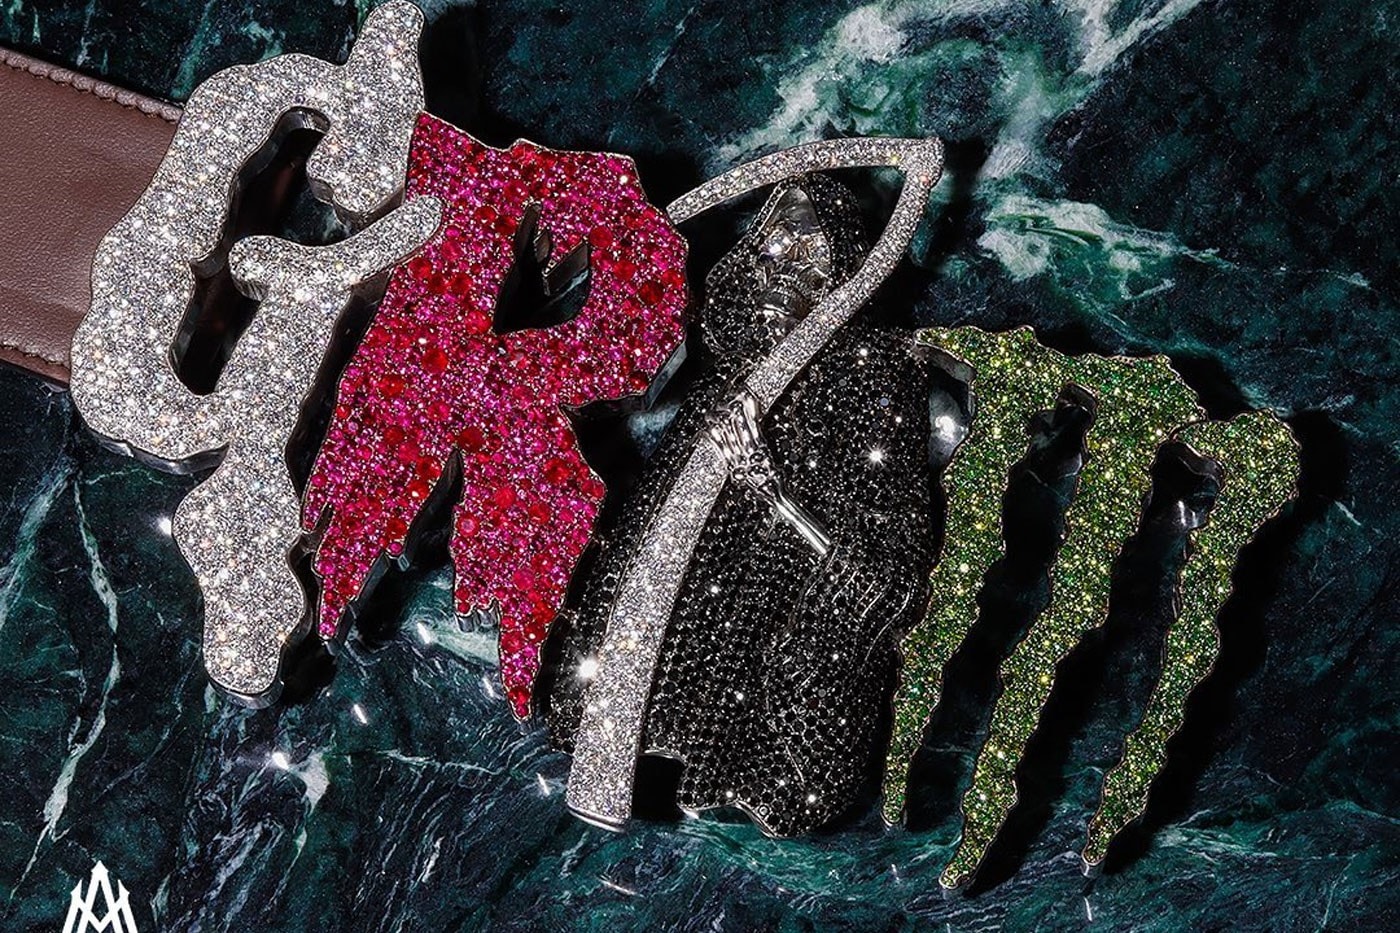 Alex Moss New York 為 A$AP Rocky 打造要價 32 萬美元的珠寶皮帶扣